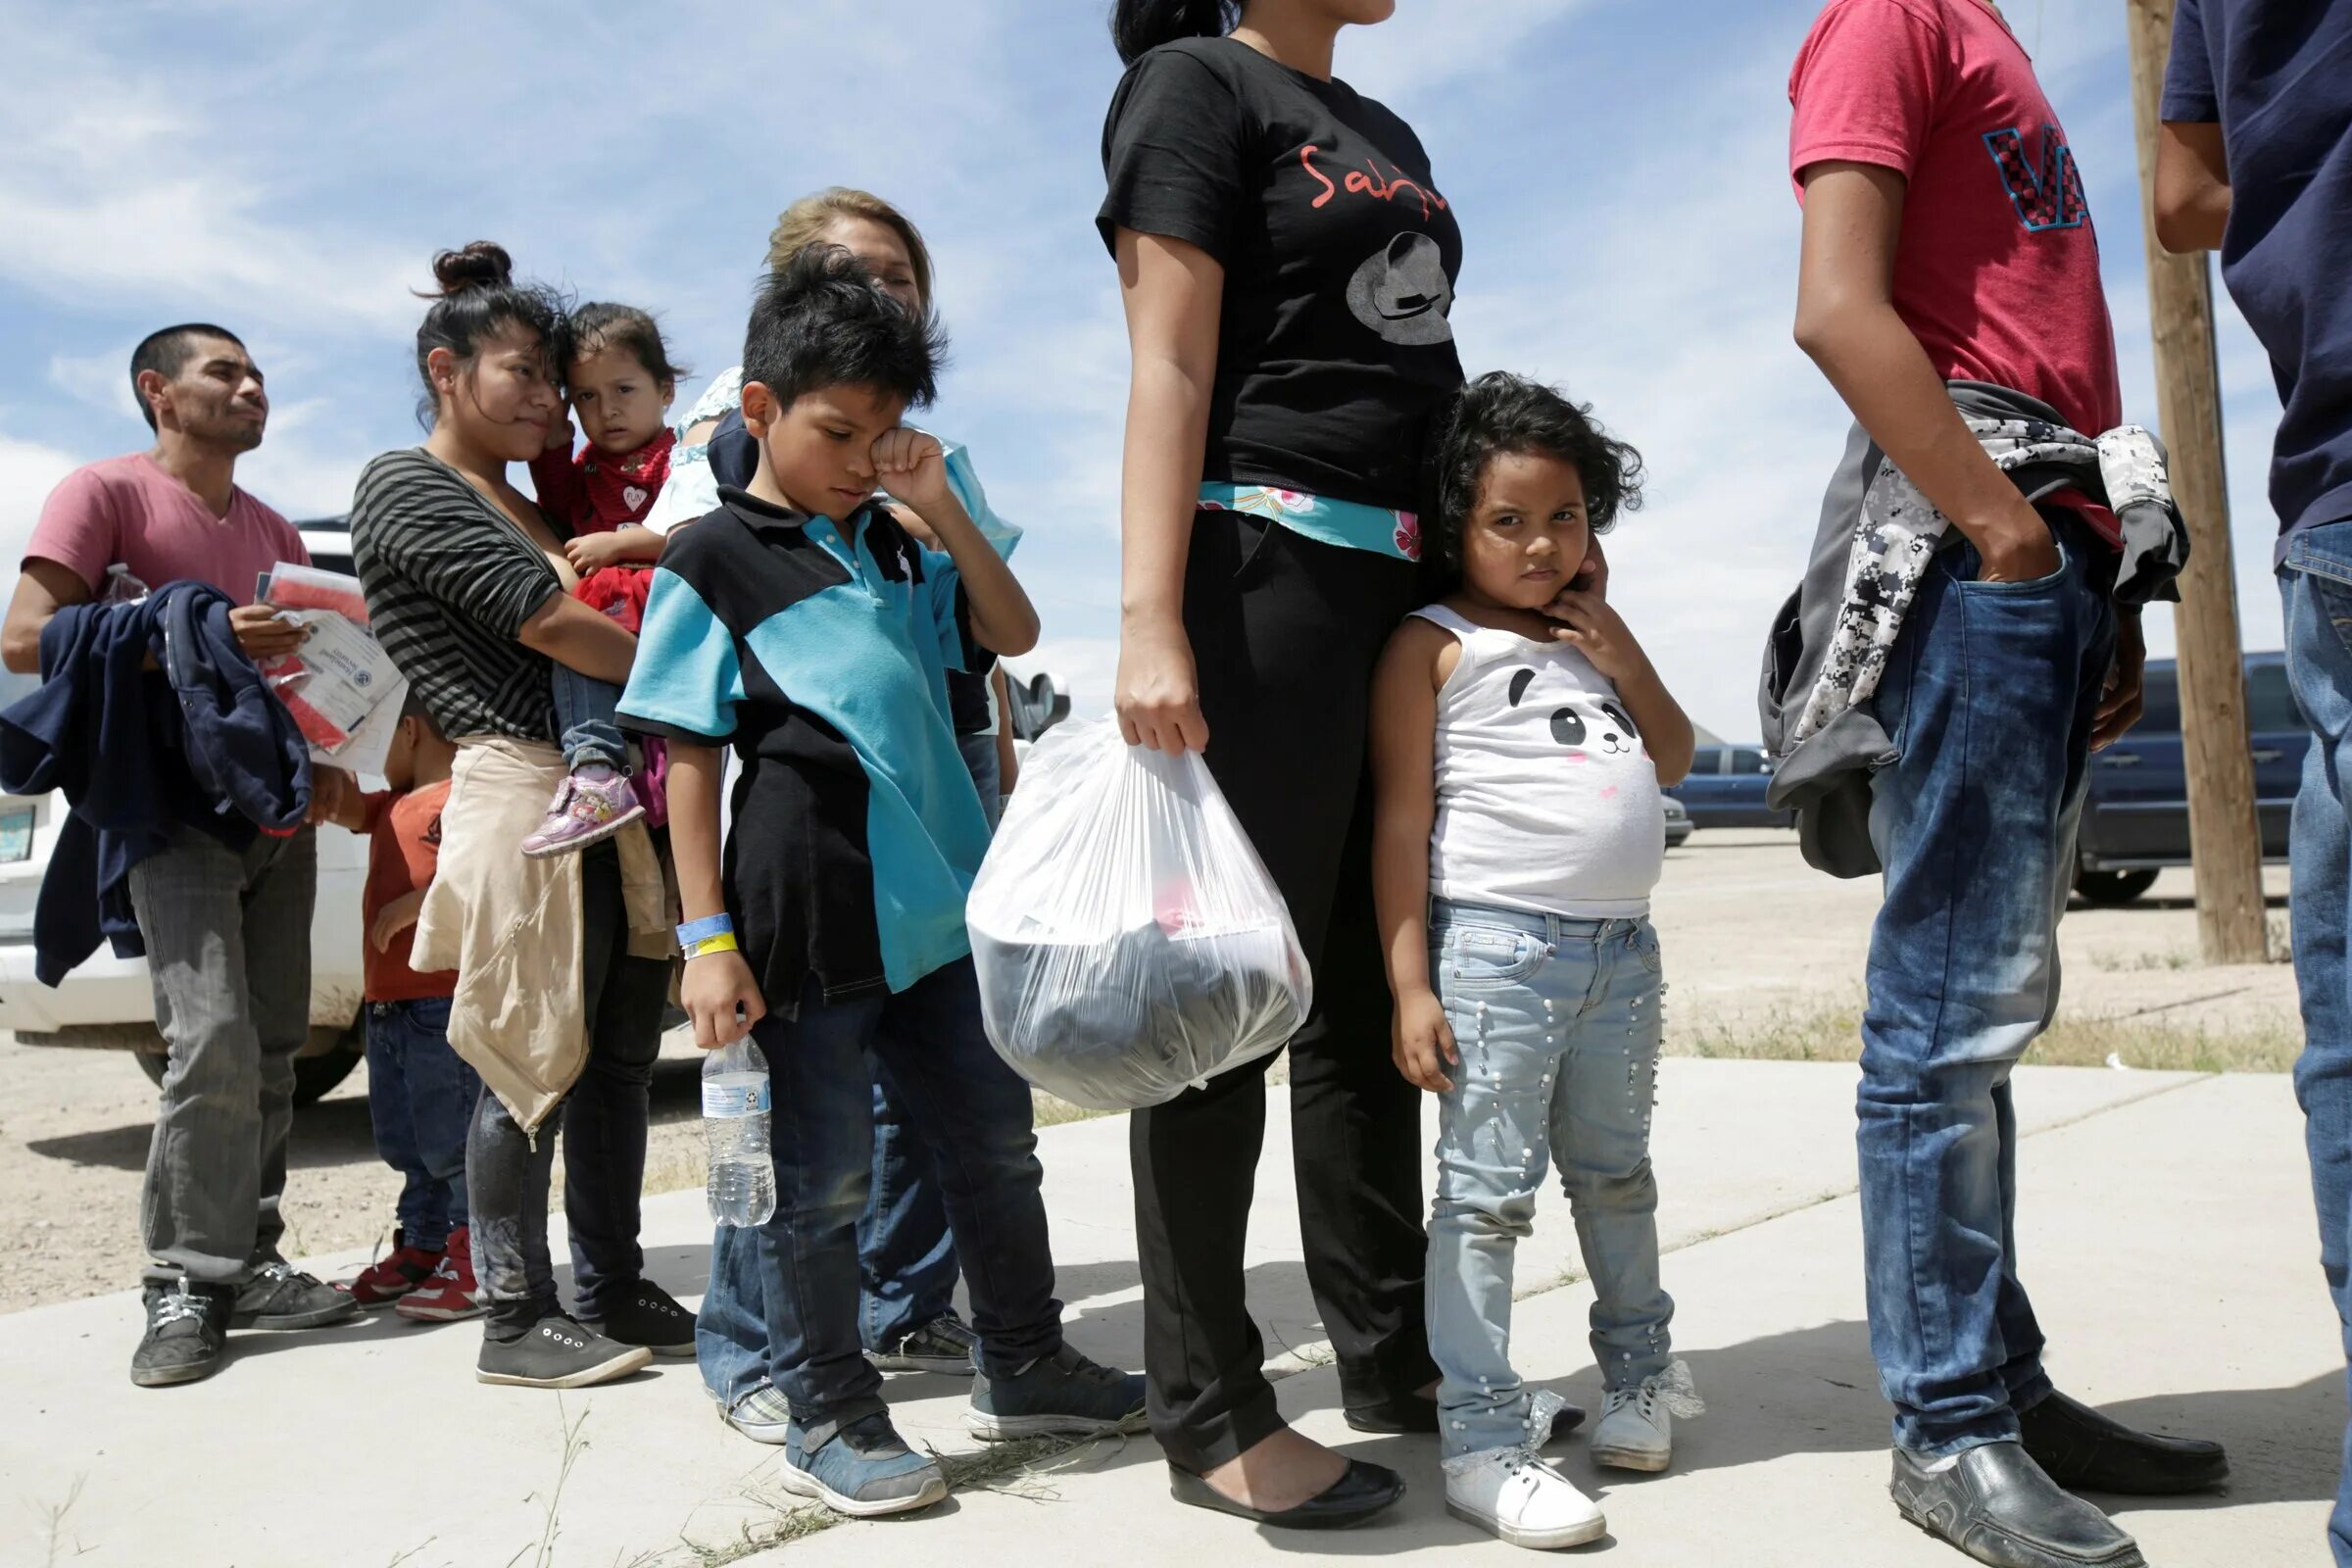 Иммигранты в Америке. Беженцы из Мексики. Беженцы в США. Беженцы с чемоданами.